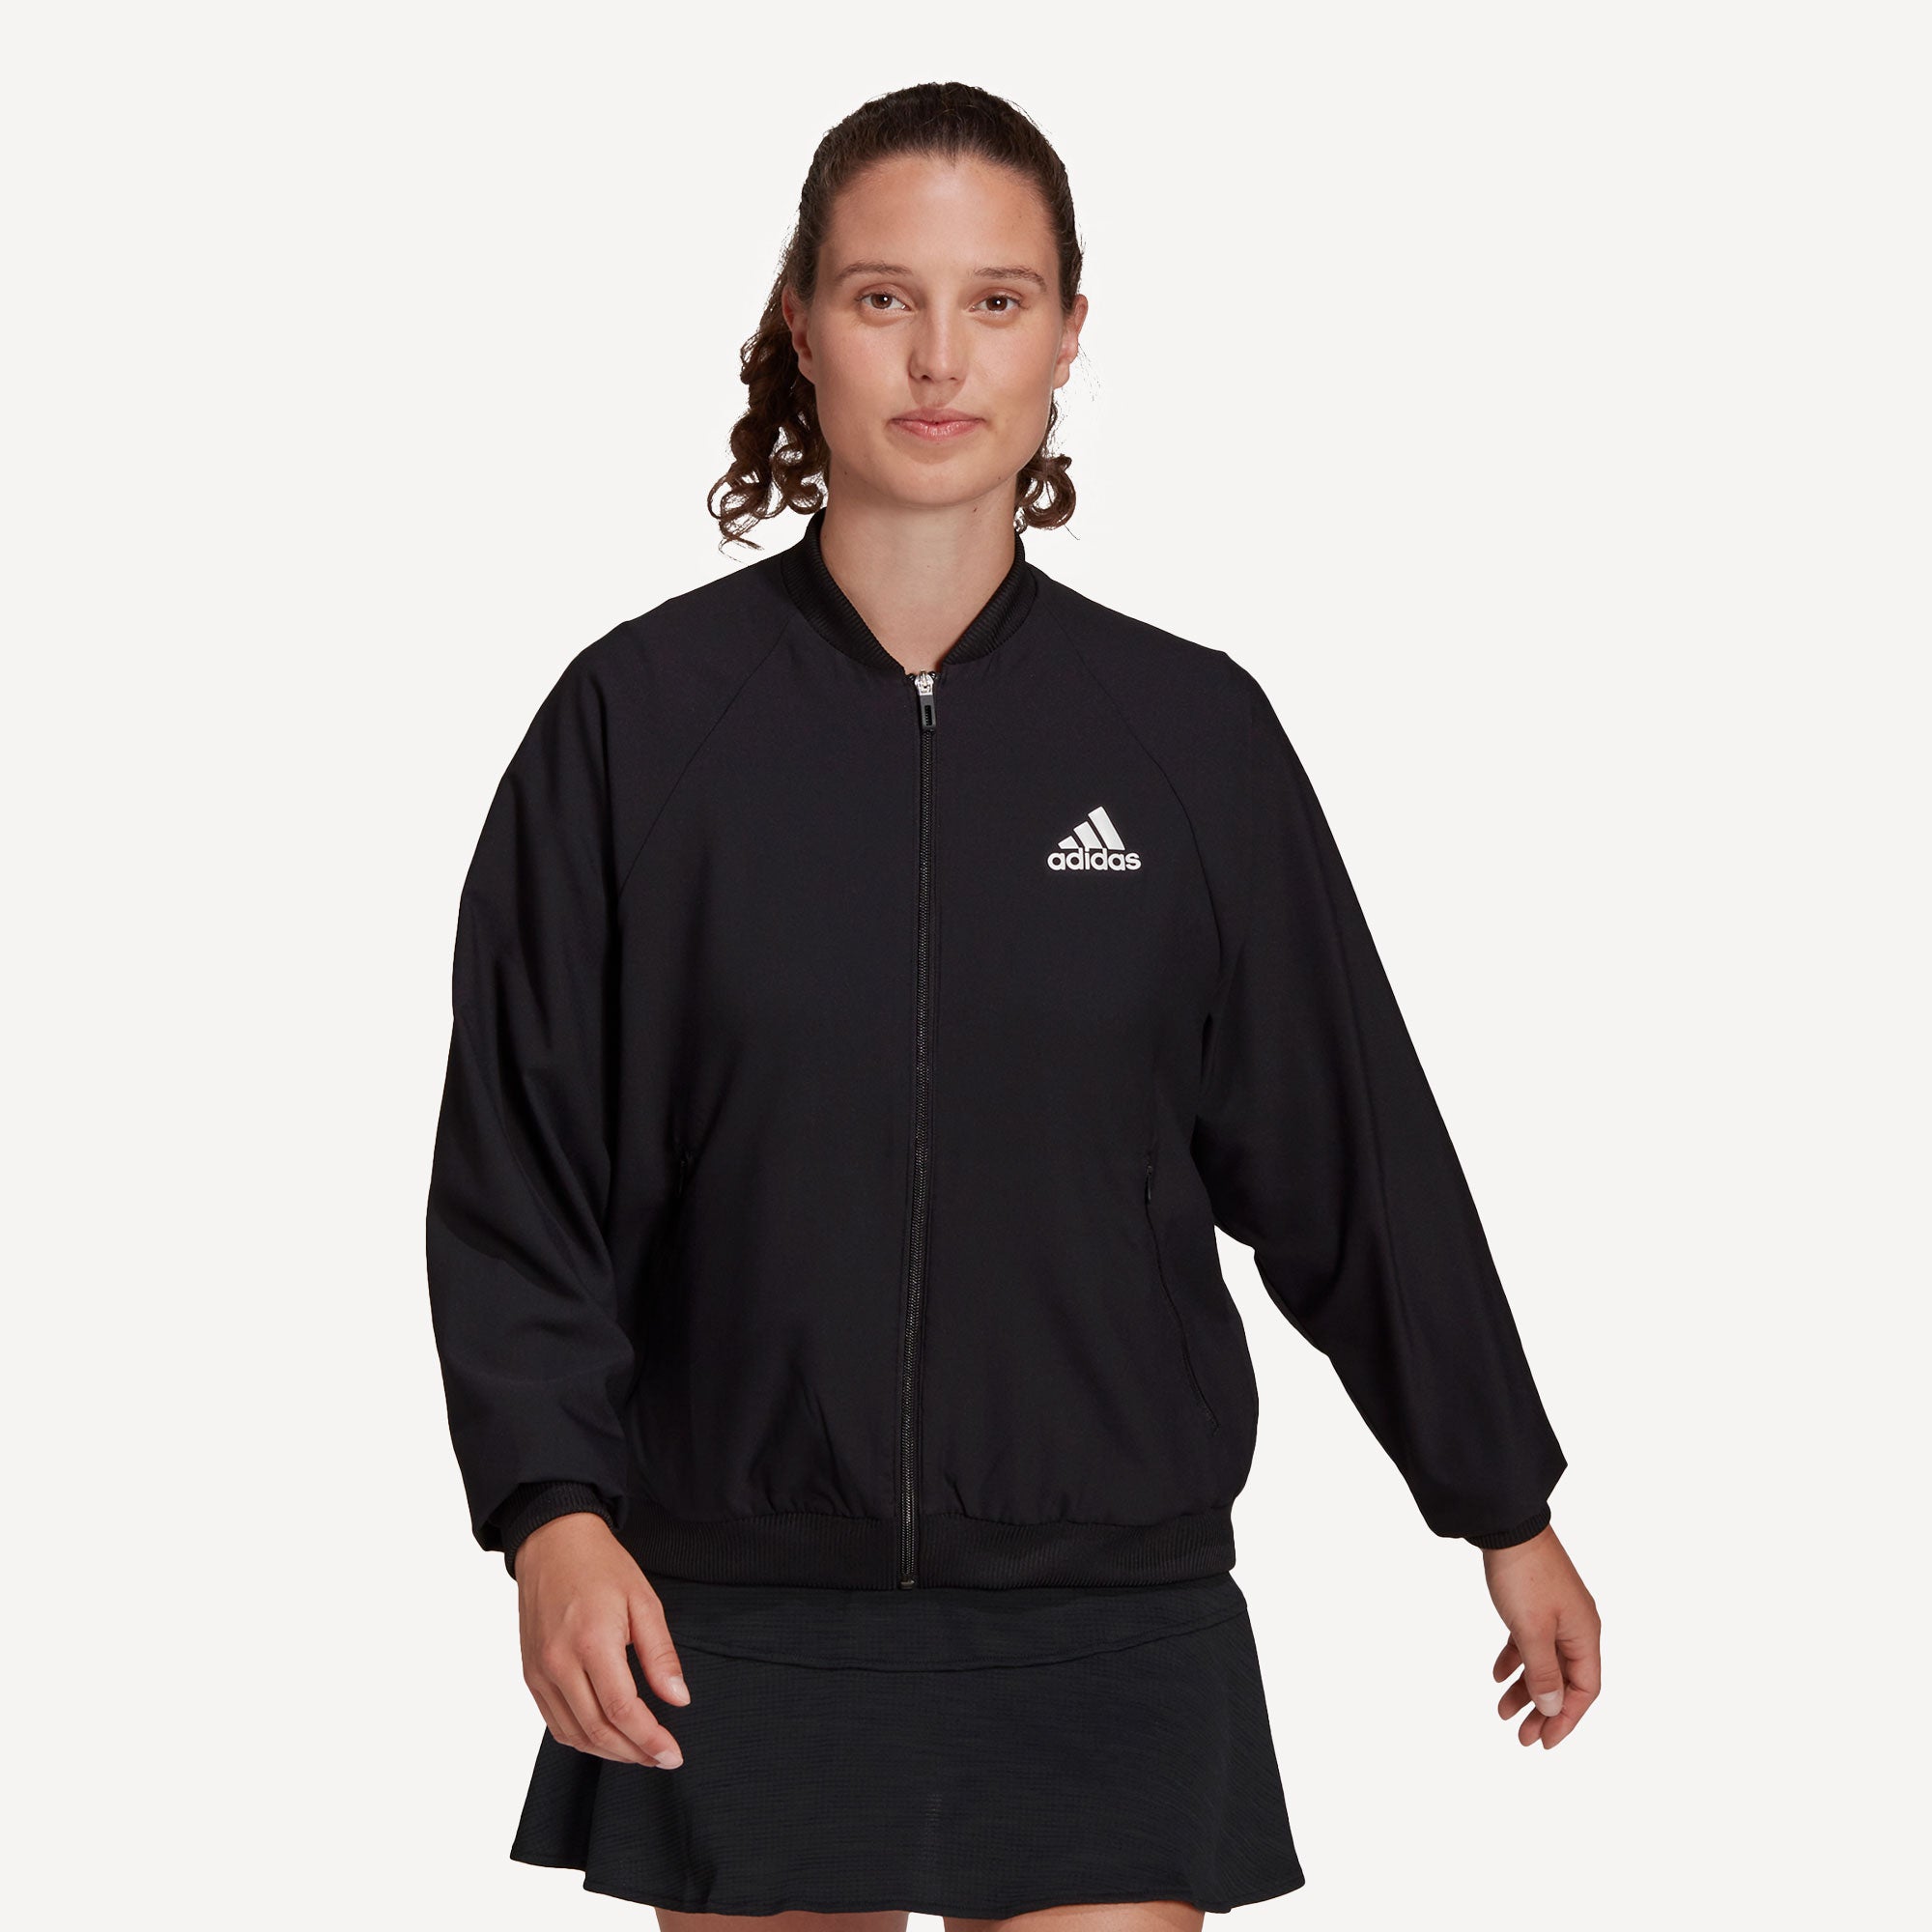 adidas Woven Women's Tennis Jacket Black (1)